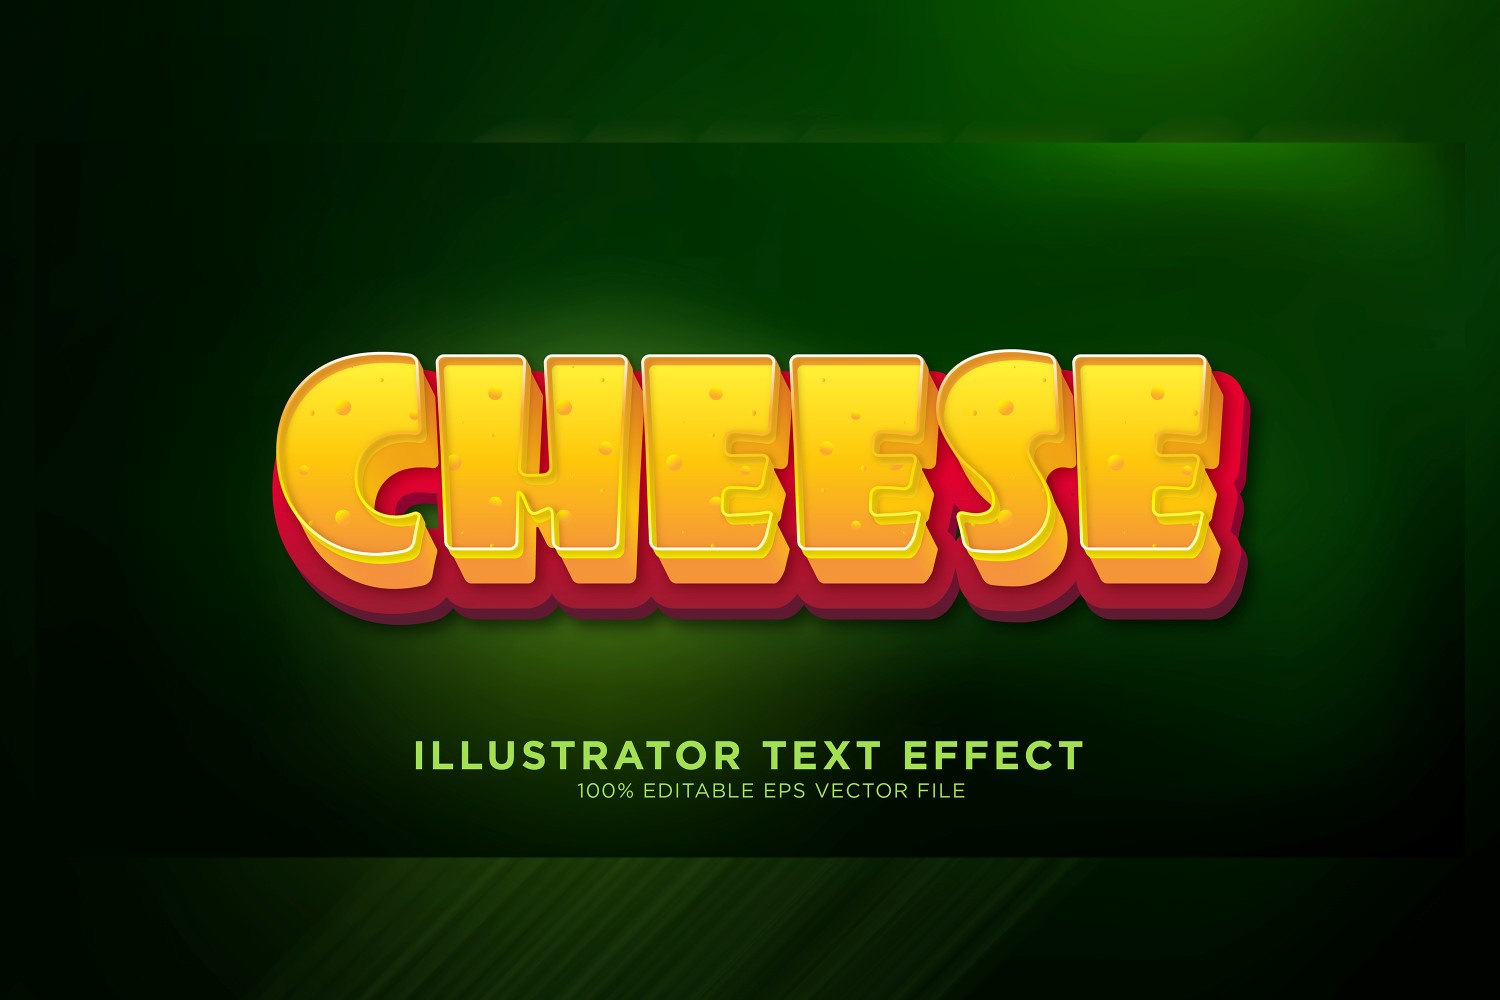 Cheese Illustrator Text Effect Illustration